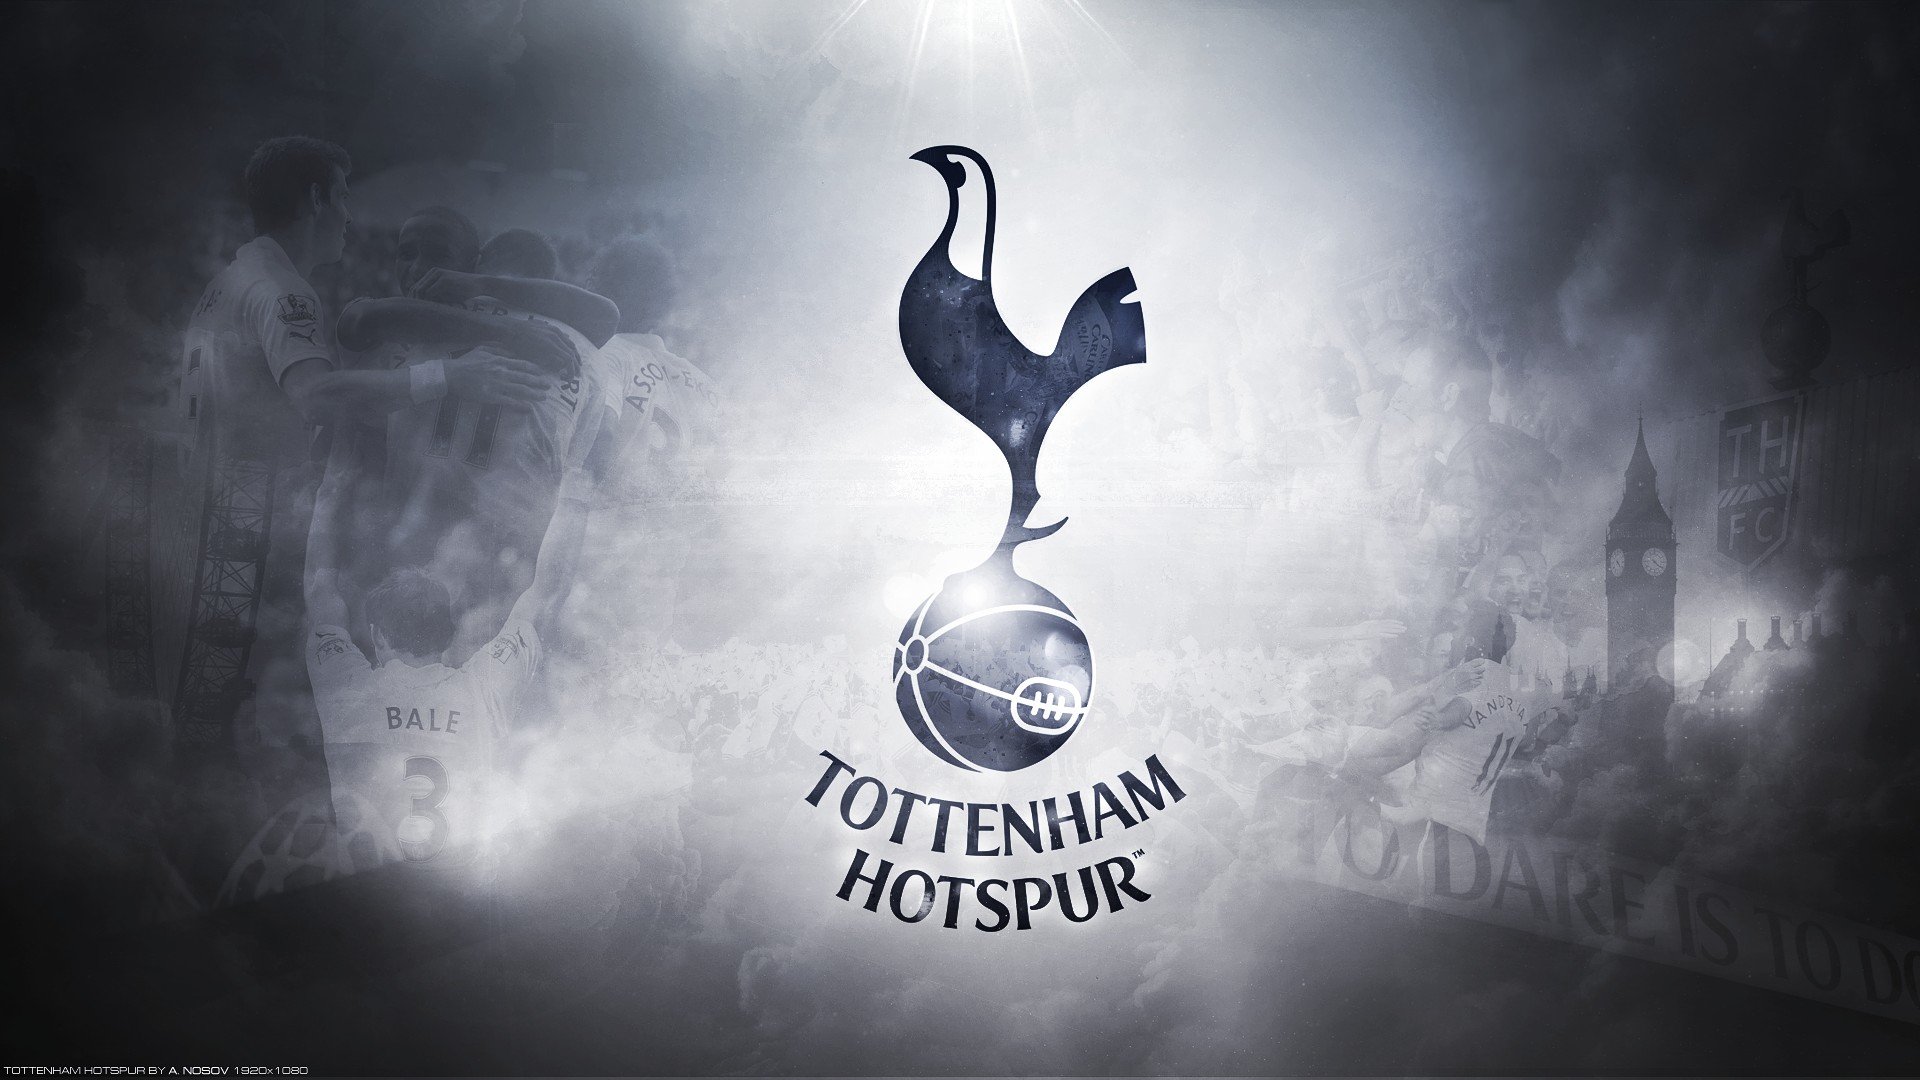 Tottenham Hotspur, Tottenham, COYS, Spurs, Eriksen Wallpaper